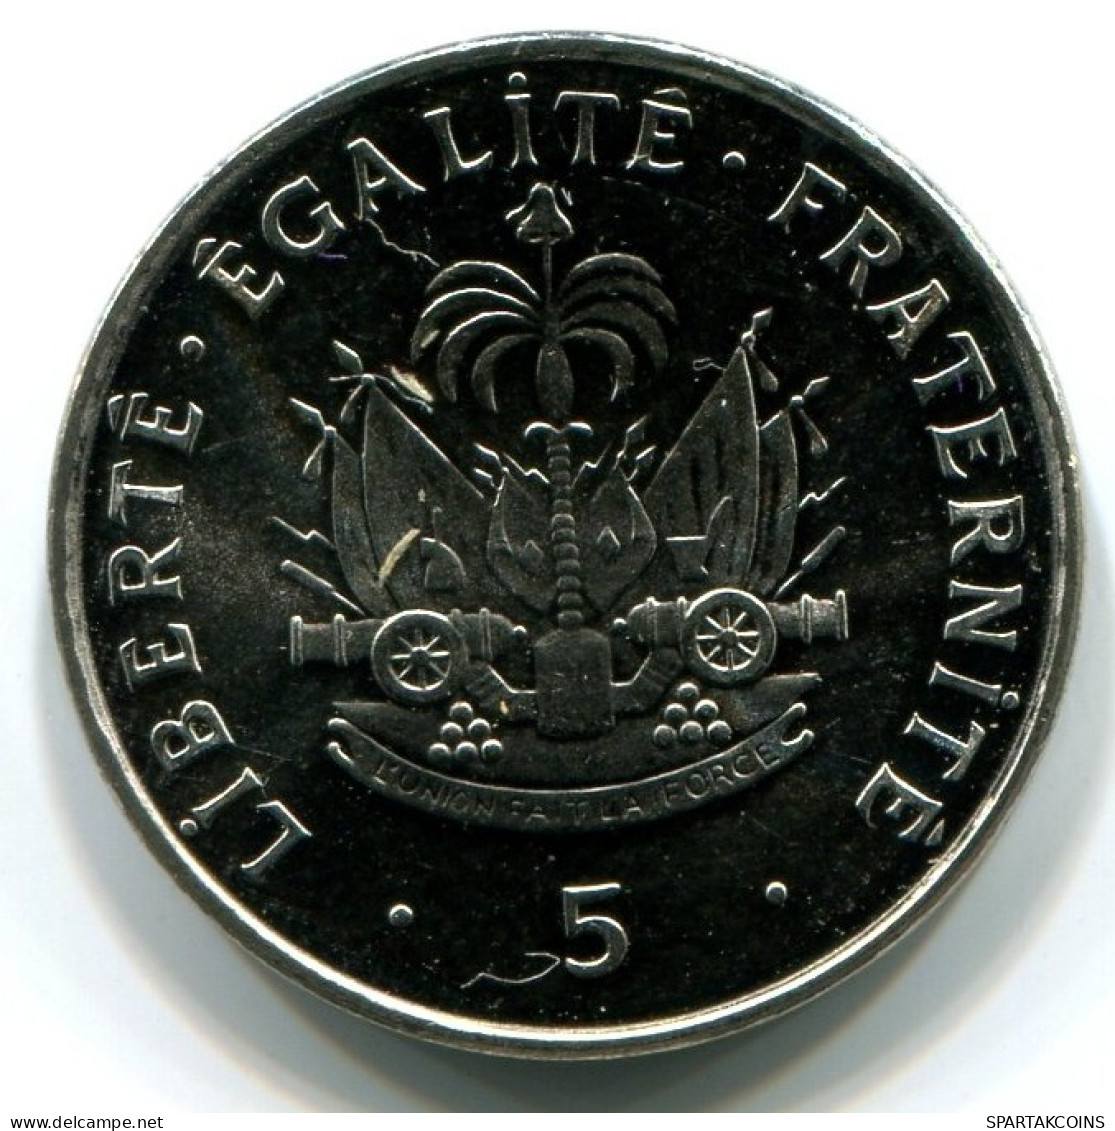 5 CENTIMES 1997 HAITI UNC Coin #W11305.U.A - Haití